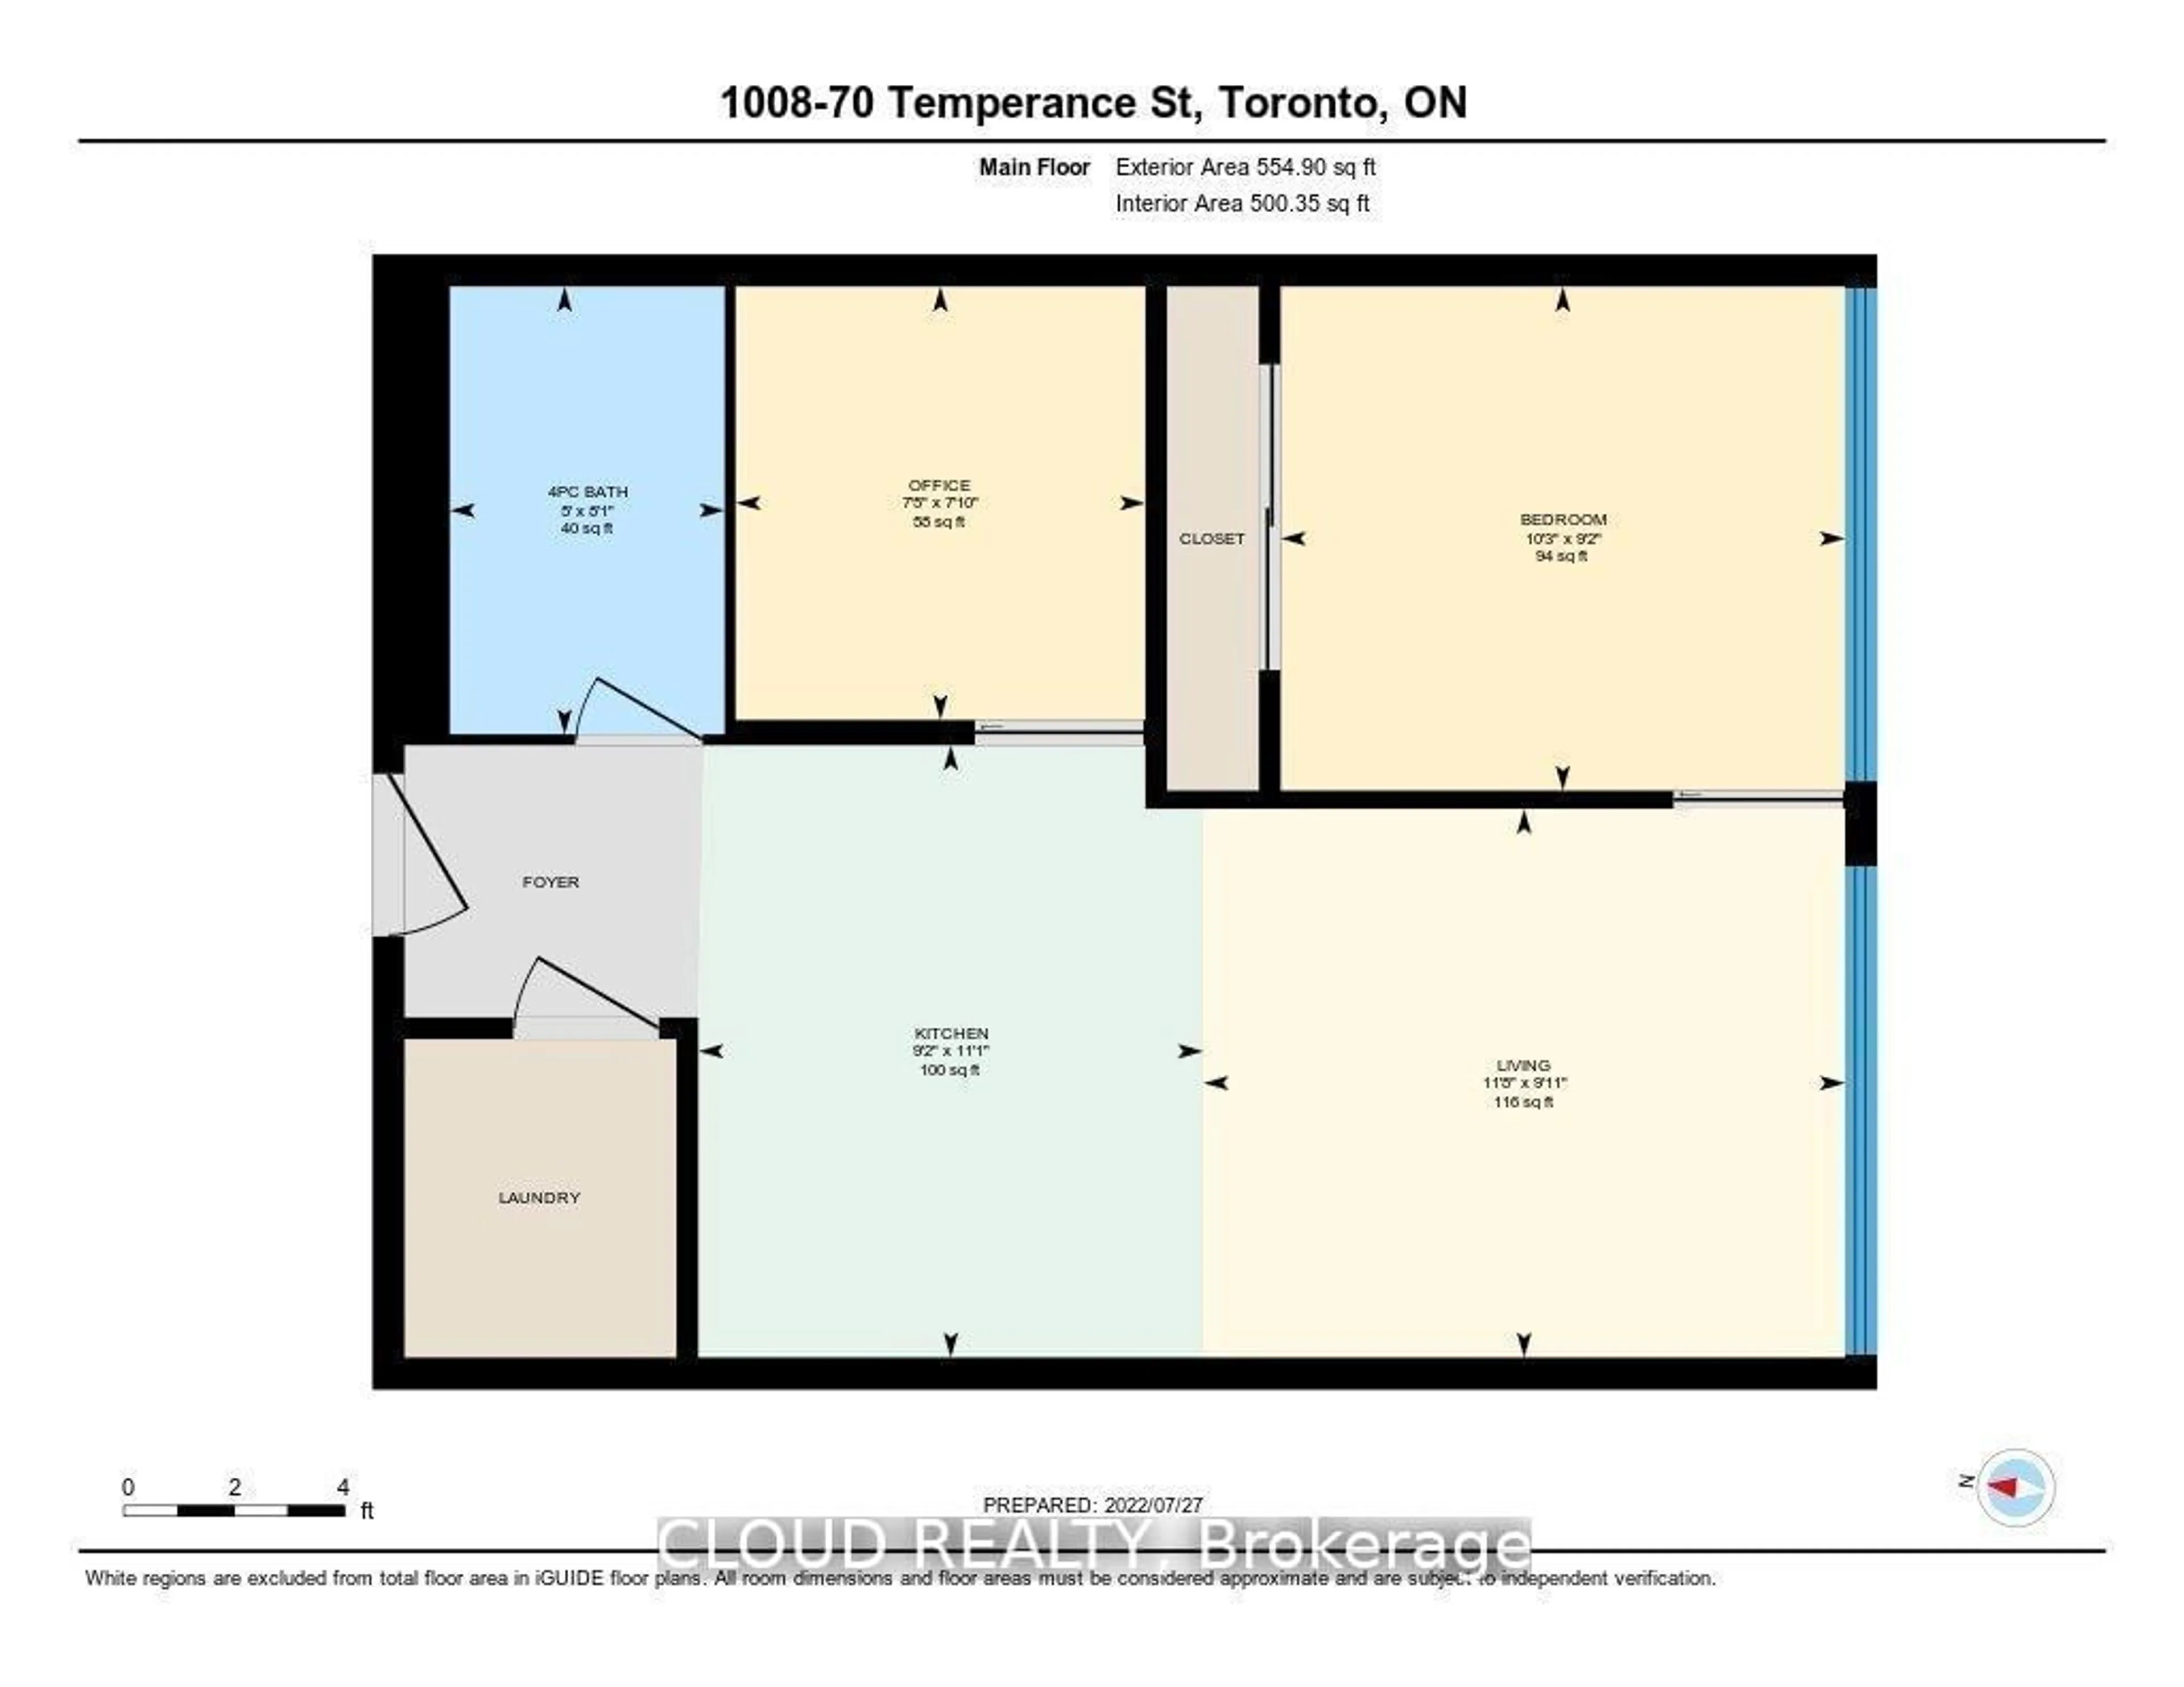 Floor plan for 70 Temperance St #1008, Toronto Ontario M5H 4E8